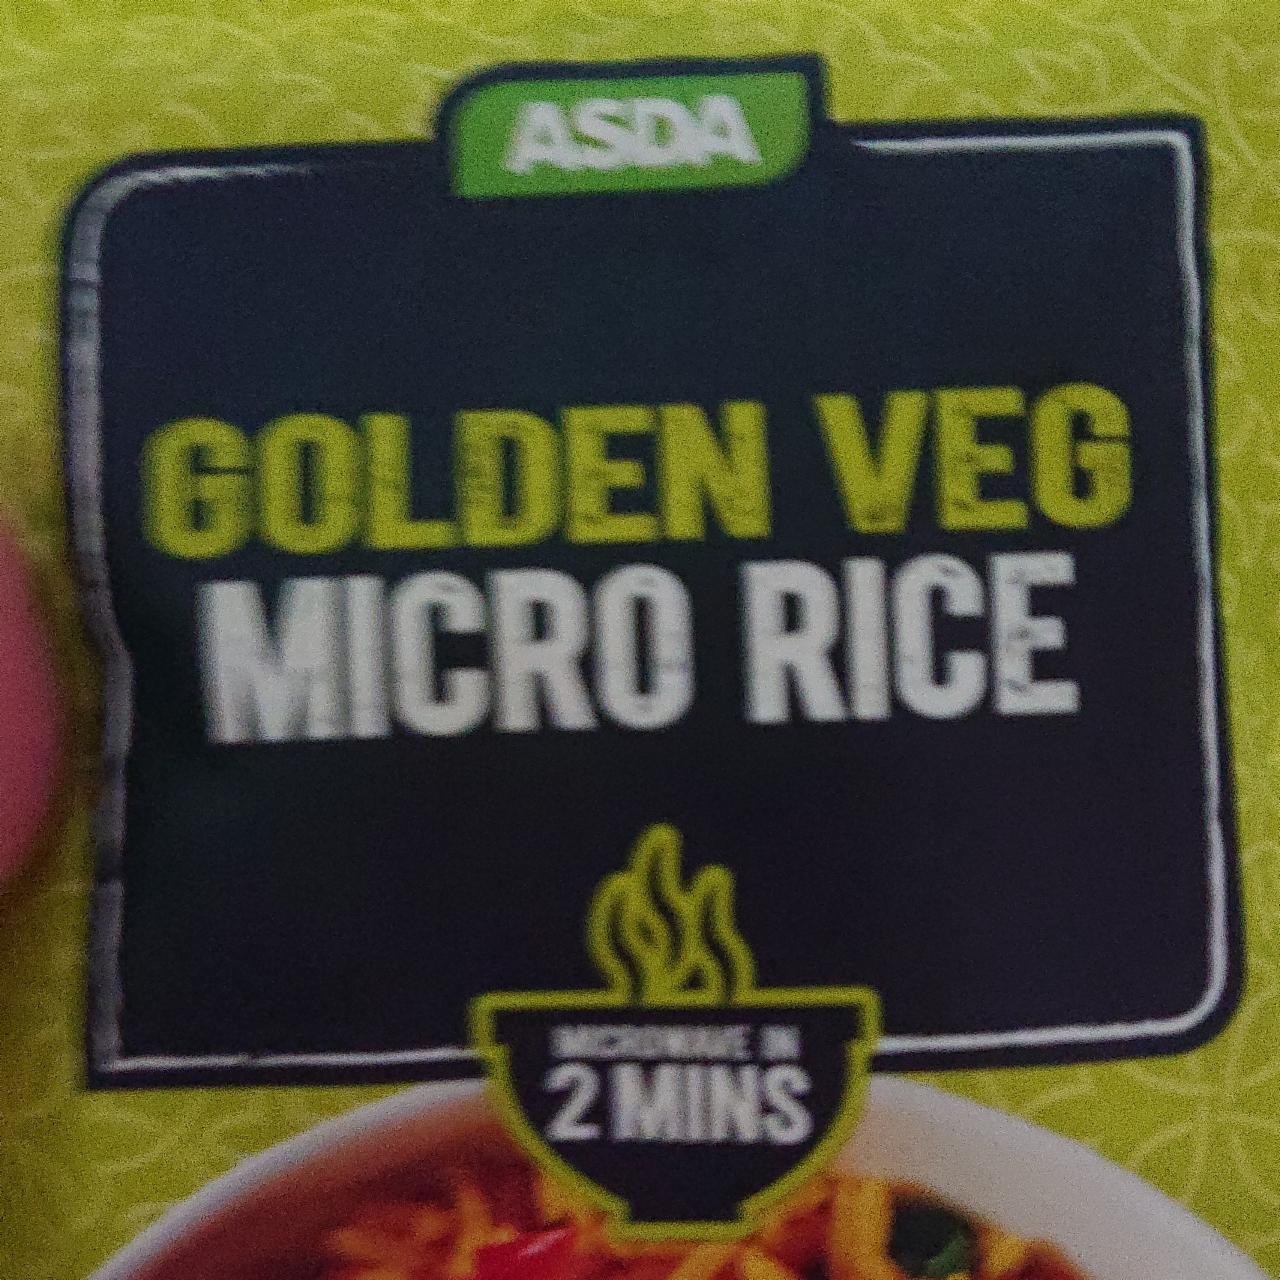 Fotografie - Golden veg micro rice Asda